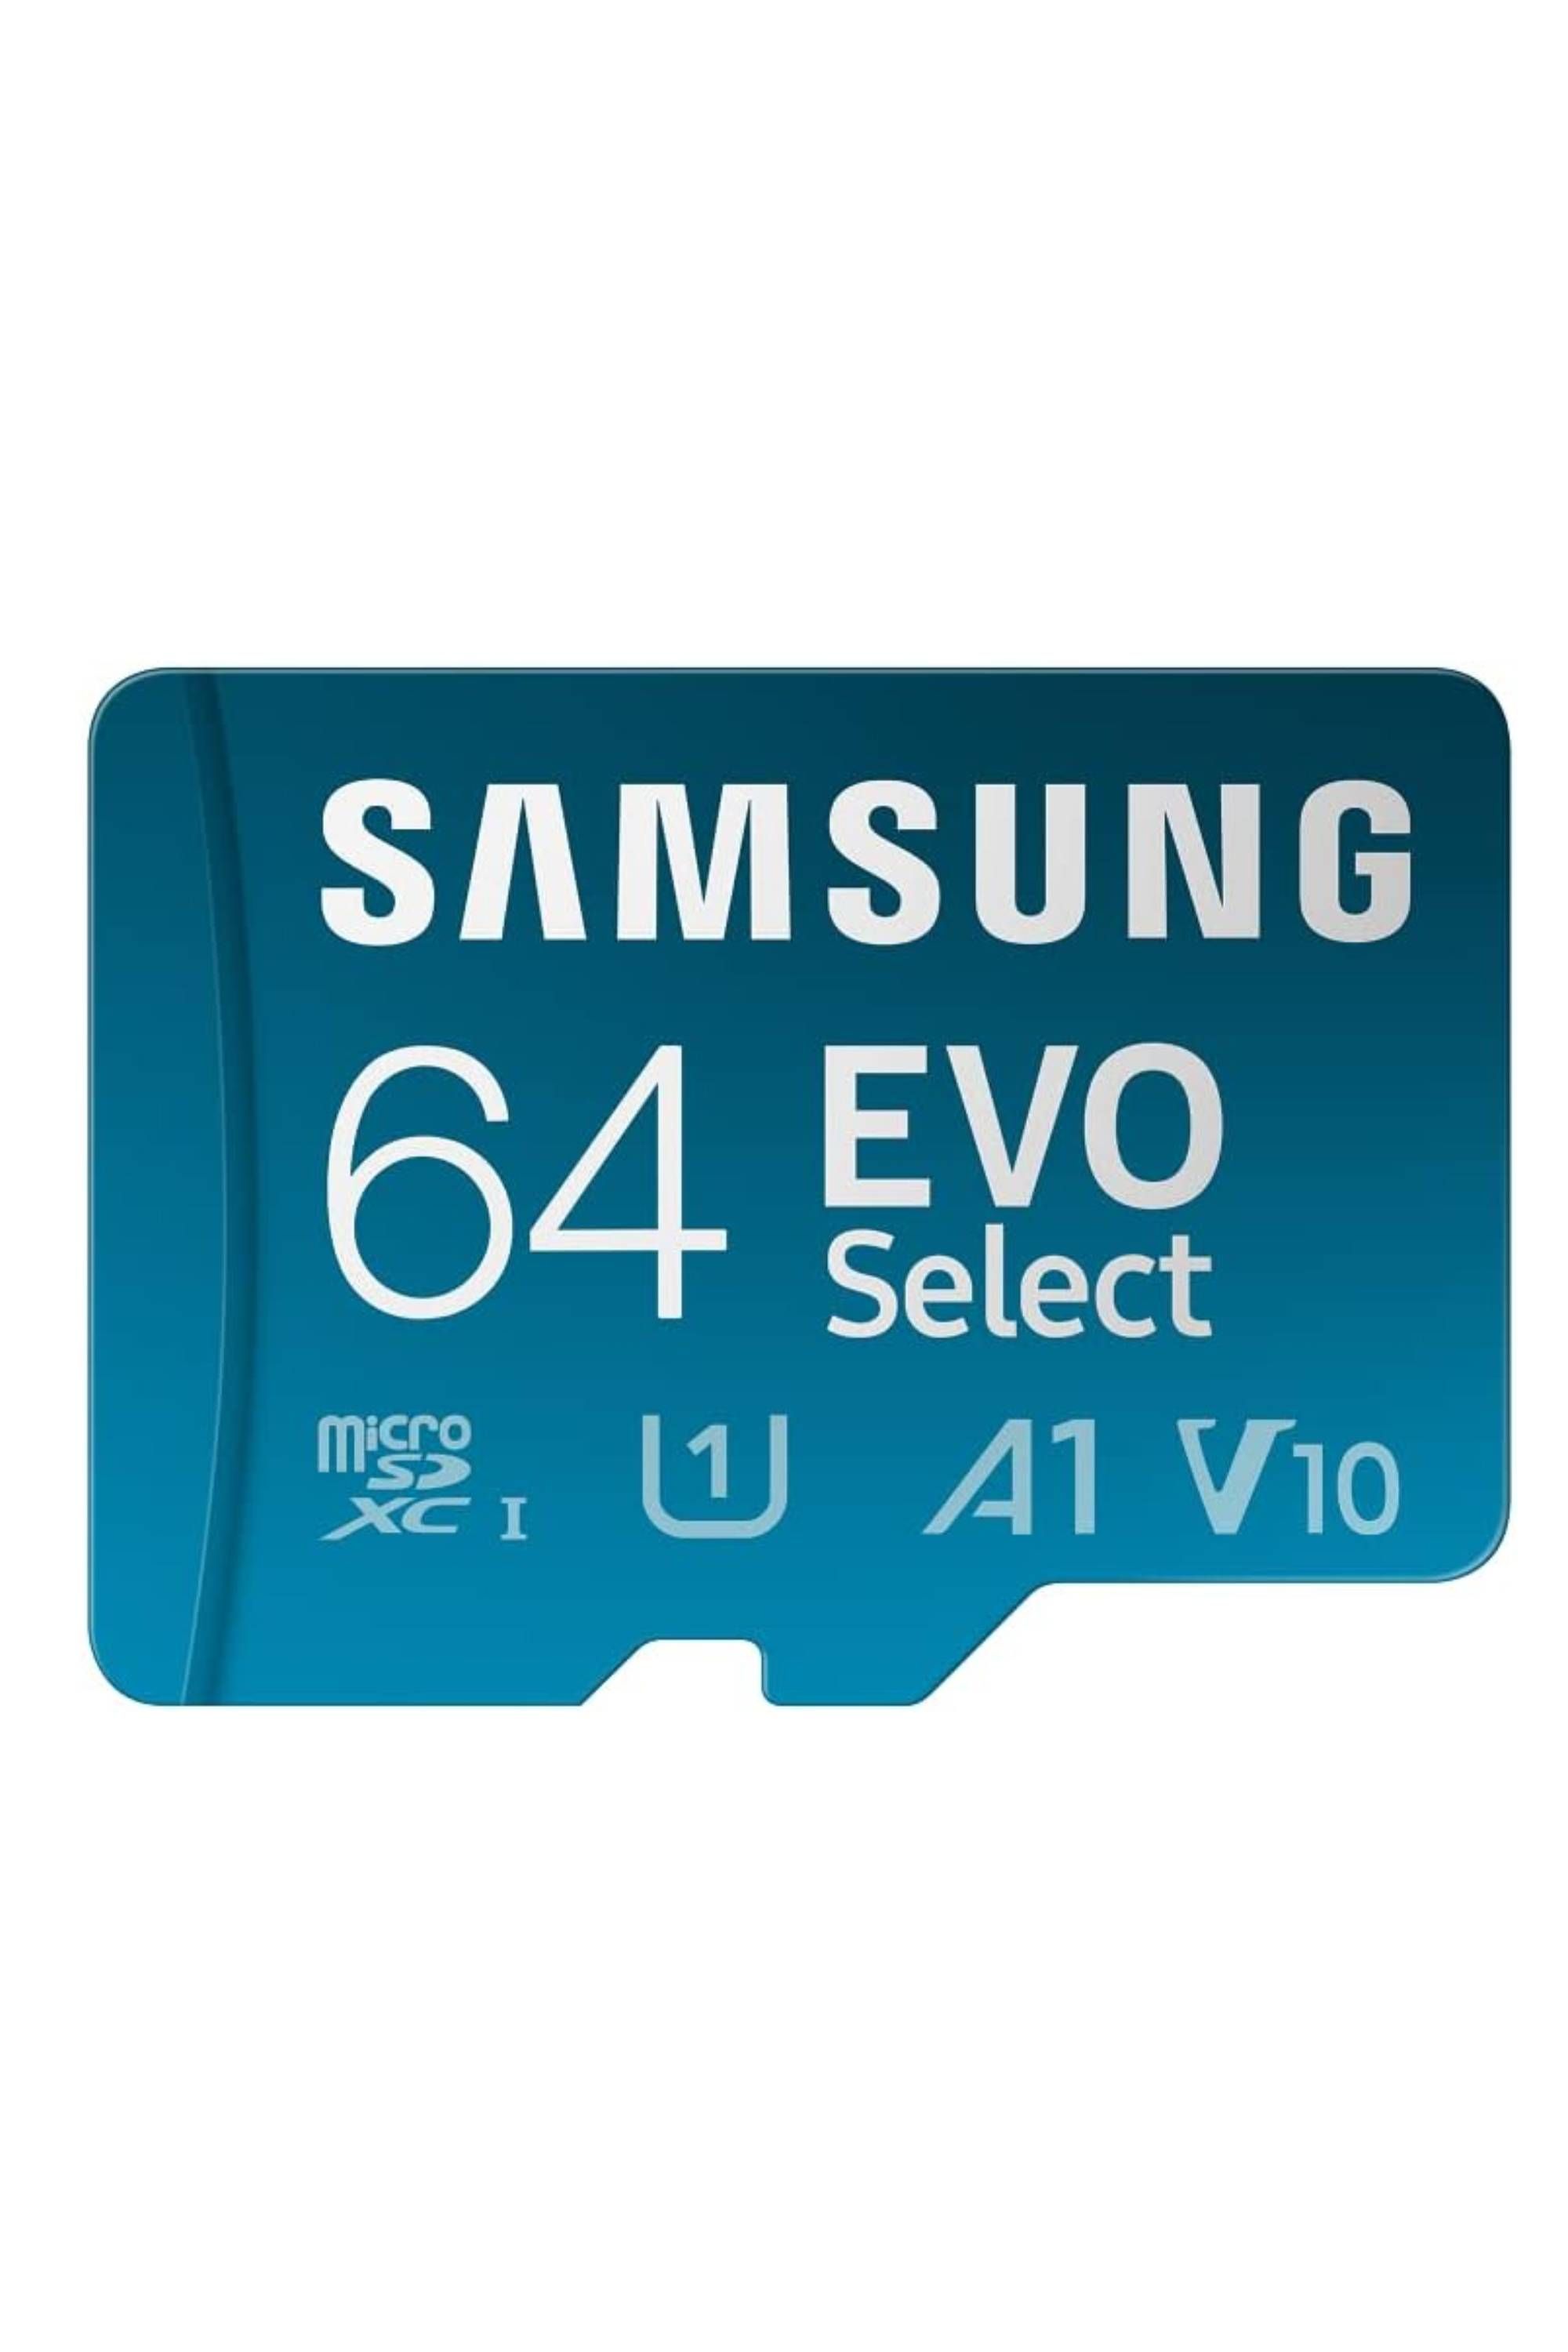 Samsung Evo Select 64GB MicroSDXC